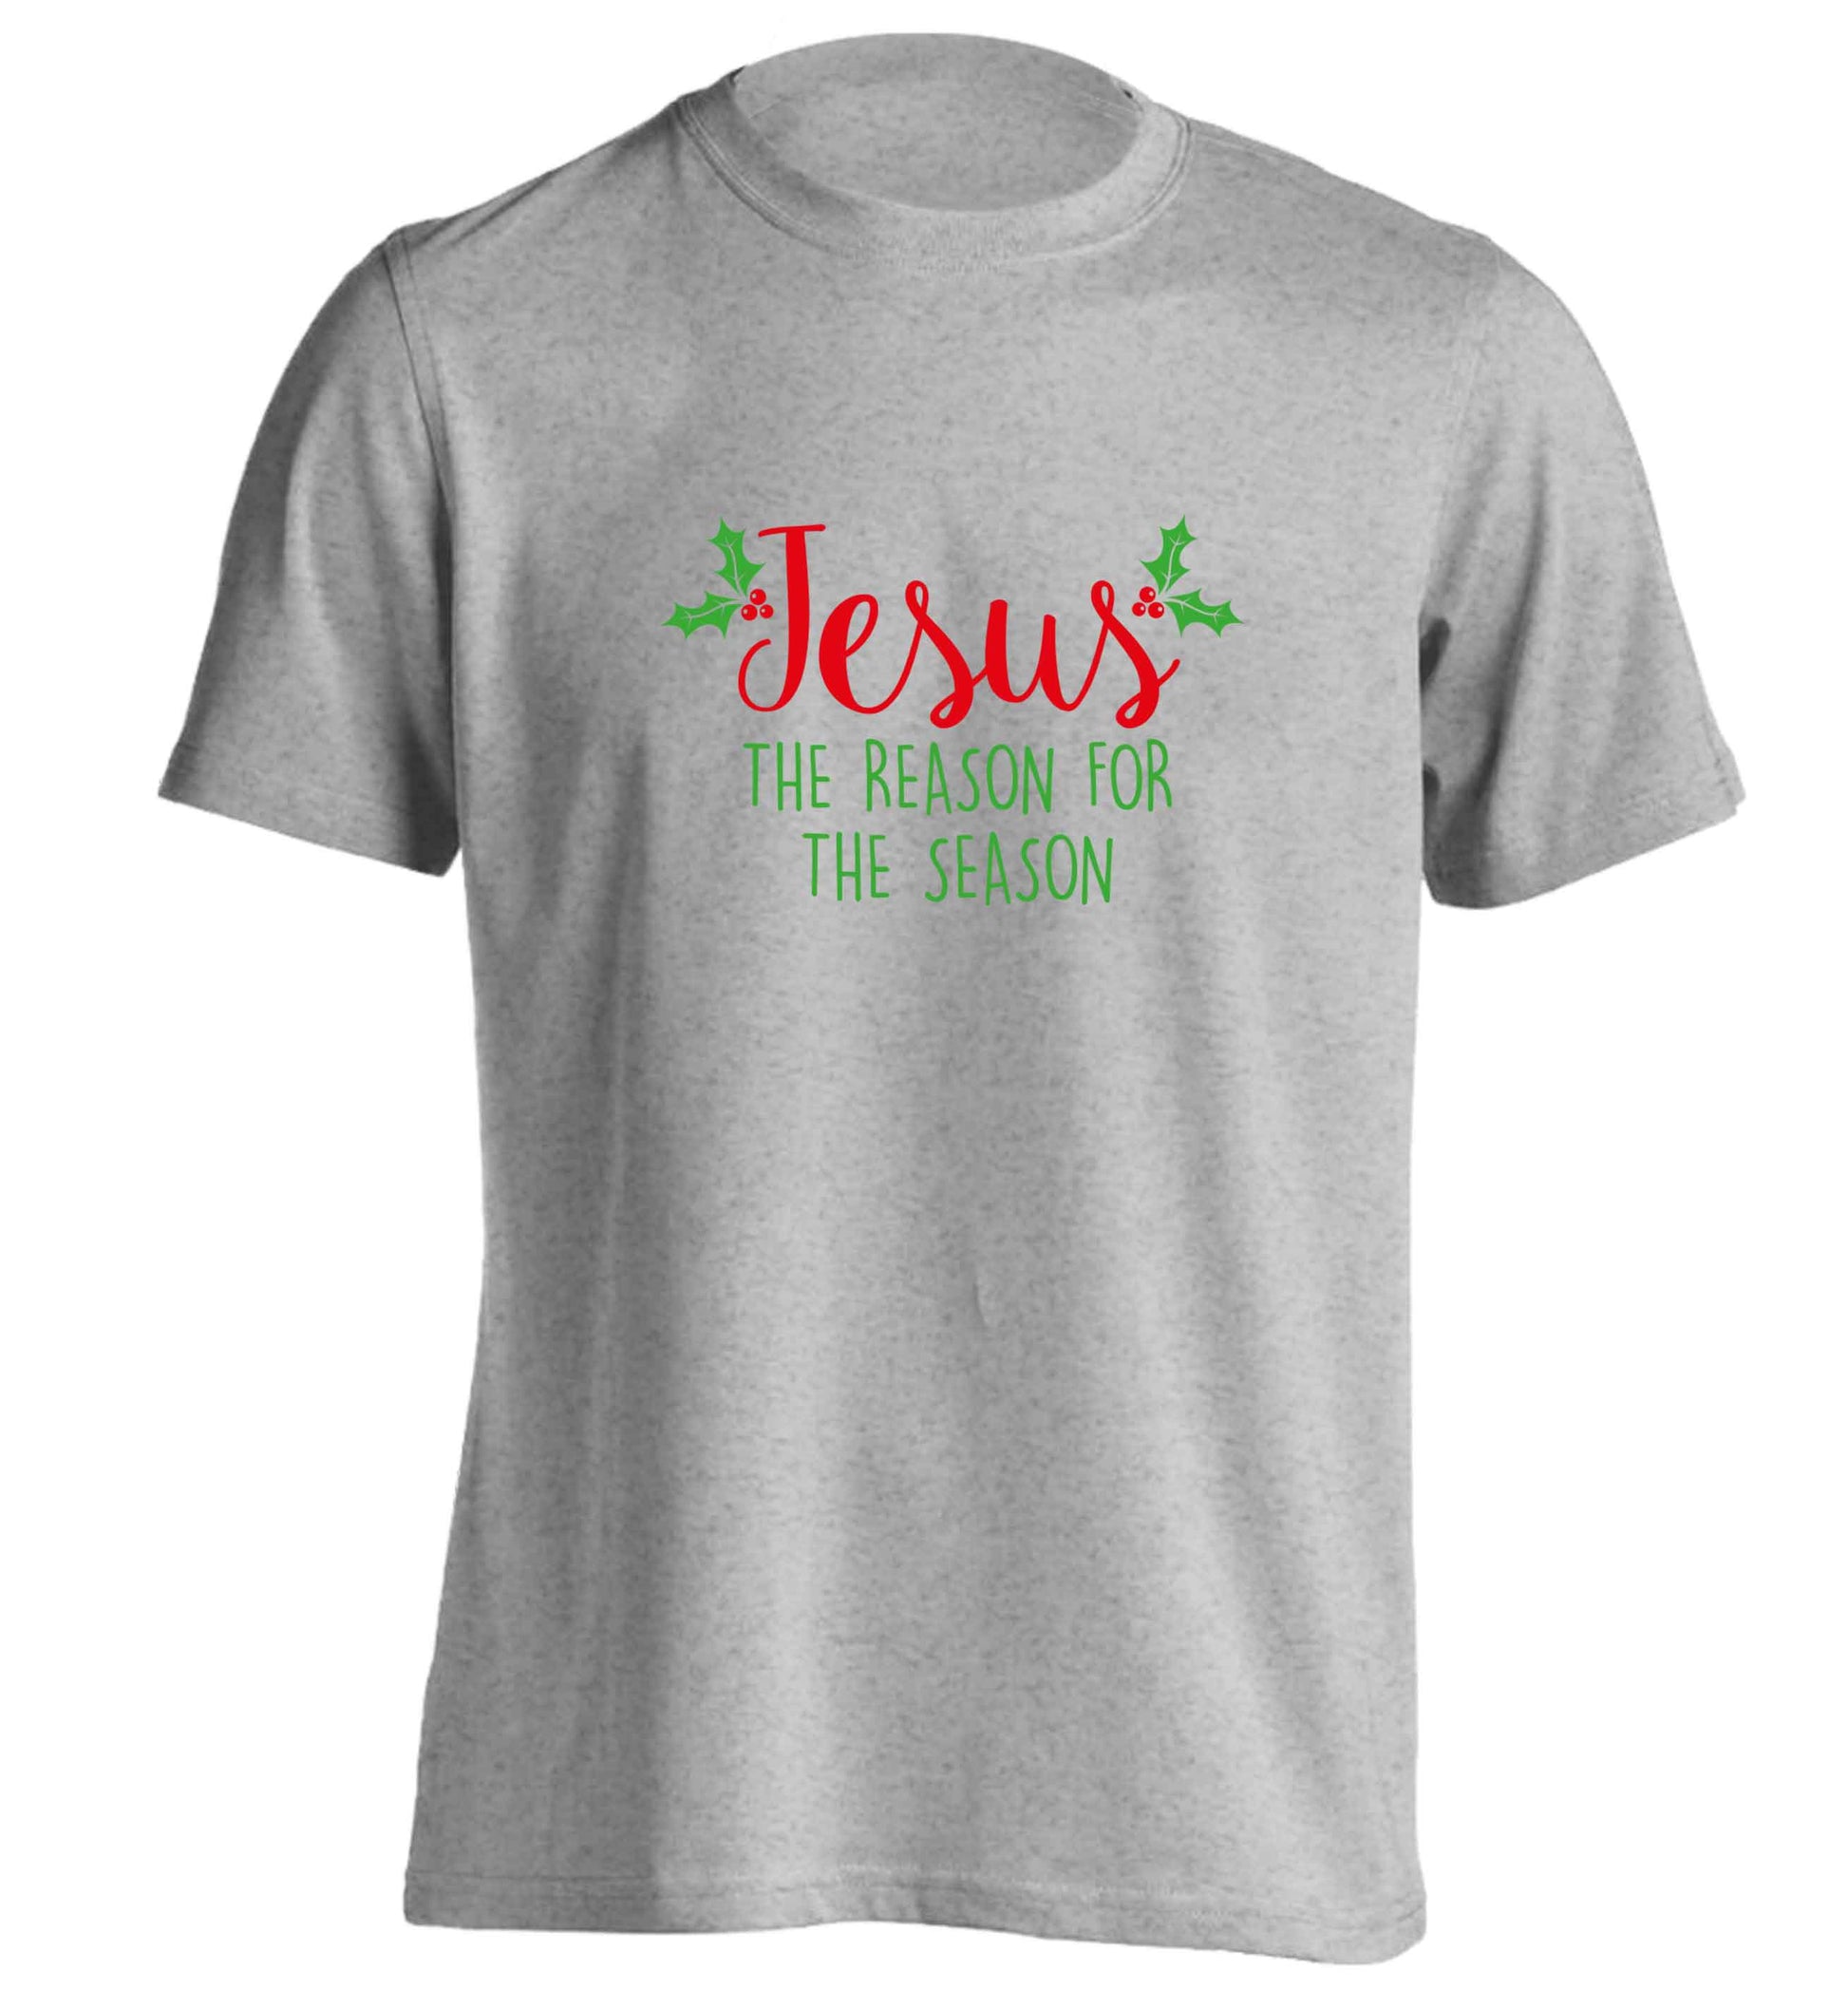 Jesus the reason for the season adults unisex grey Tshirt 2XL